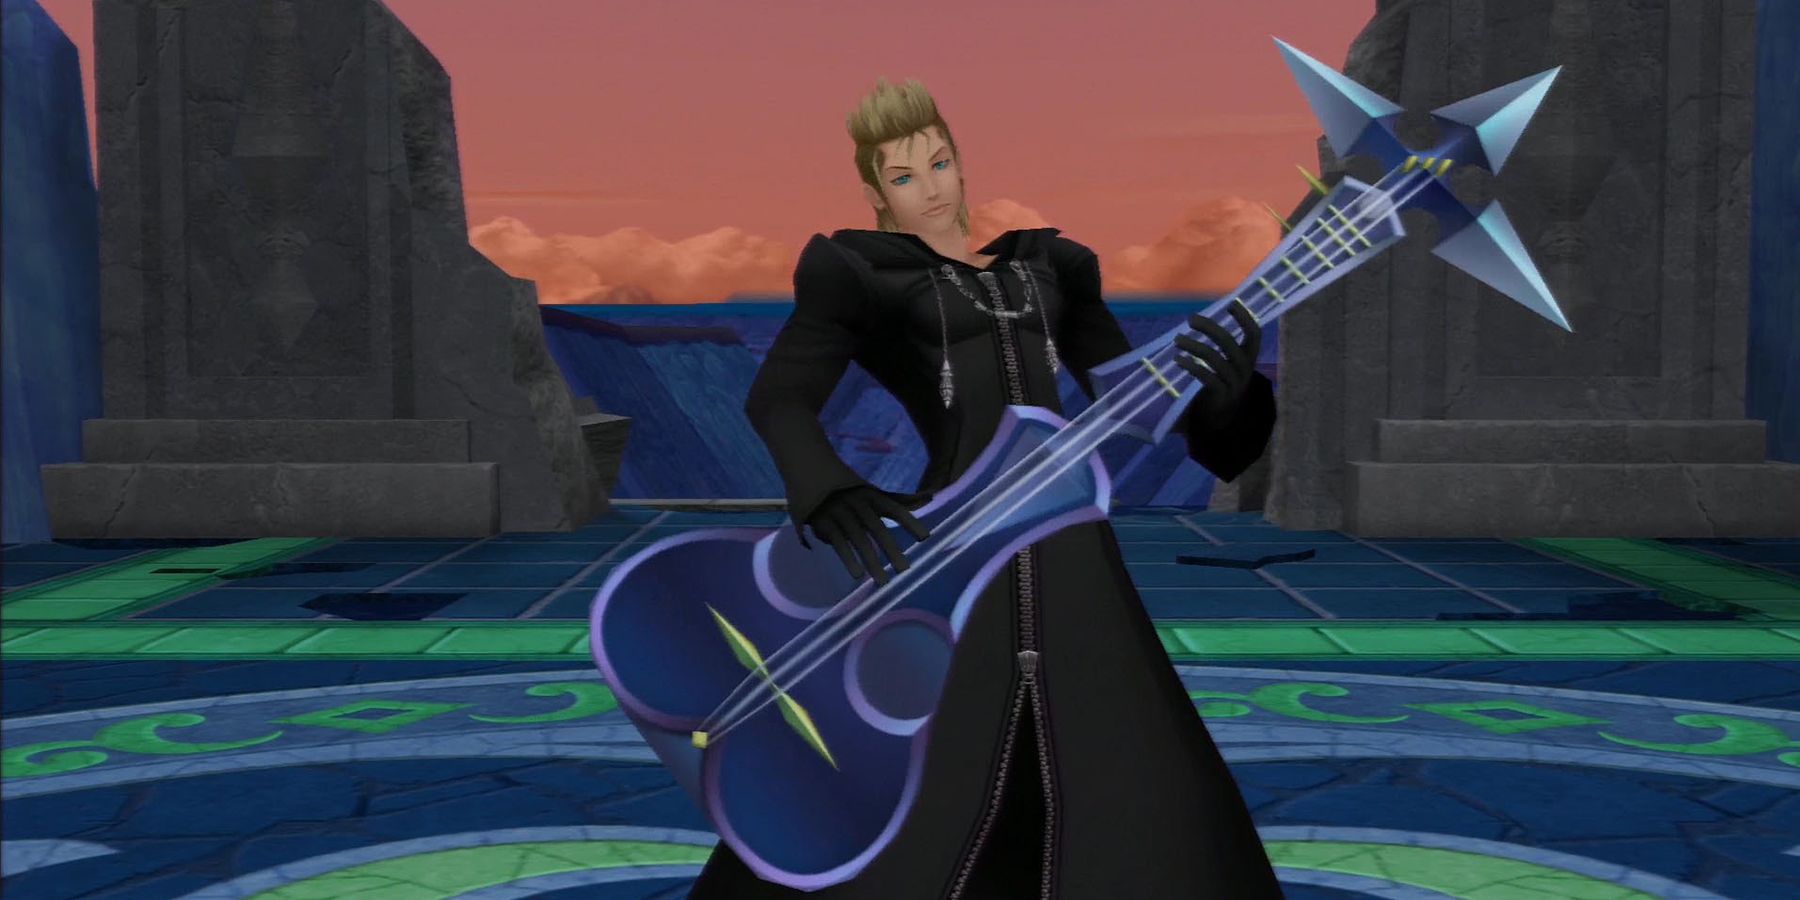 Demyx plays a giant guitar from Kingdom Hearts II